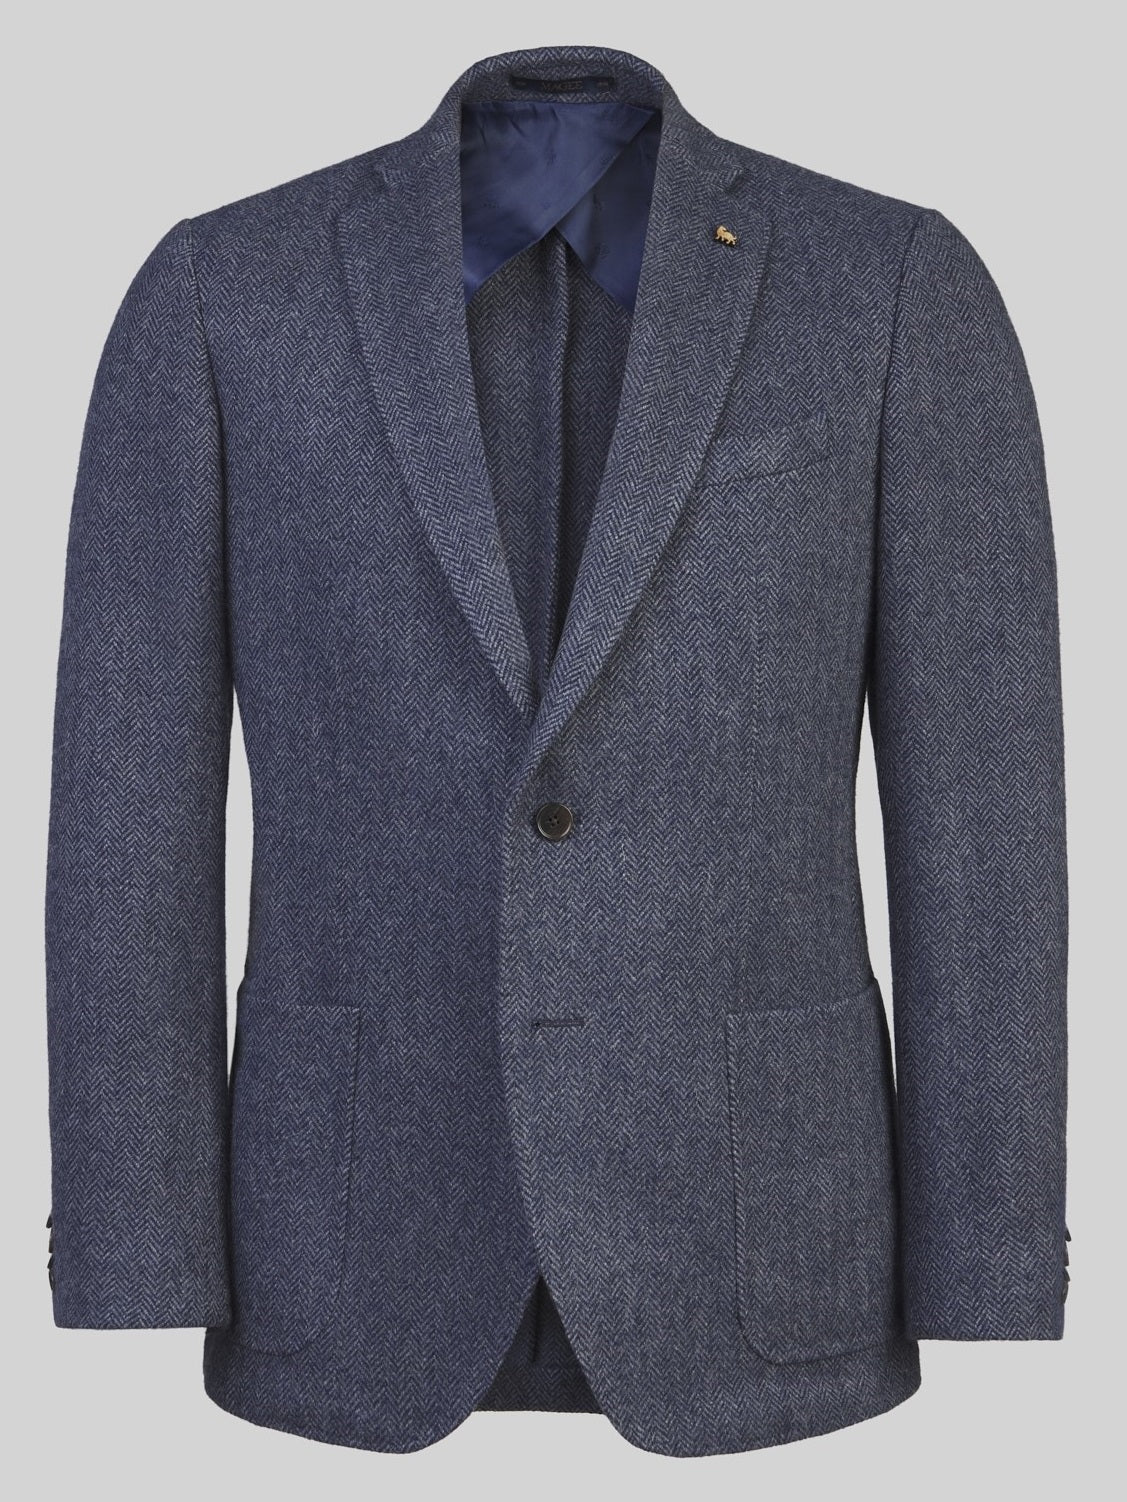 40% OFF - MAGEE Donegal Tweed Blazer - Mens Easky Patch Pocket - Blue & Grey Herringbone - Size: 38 REG